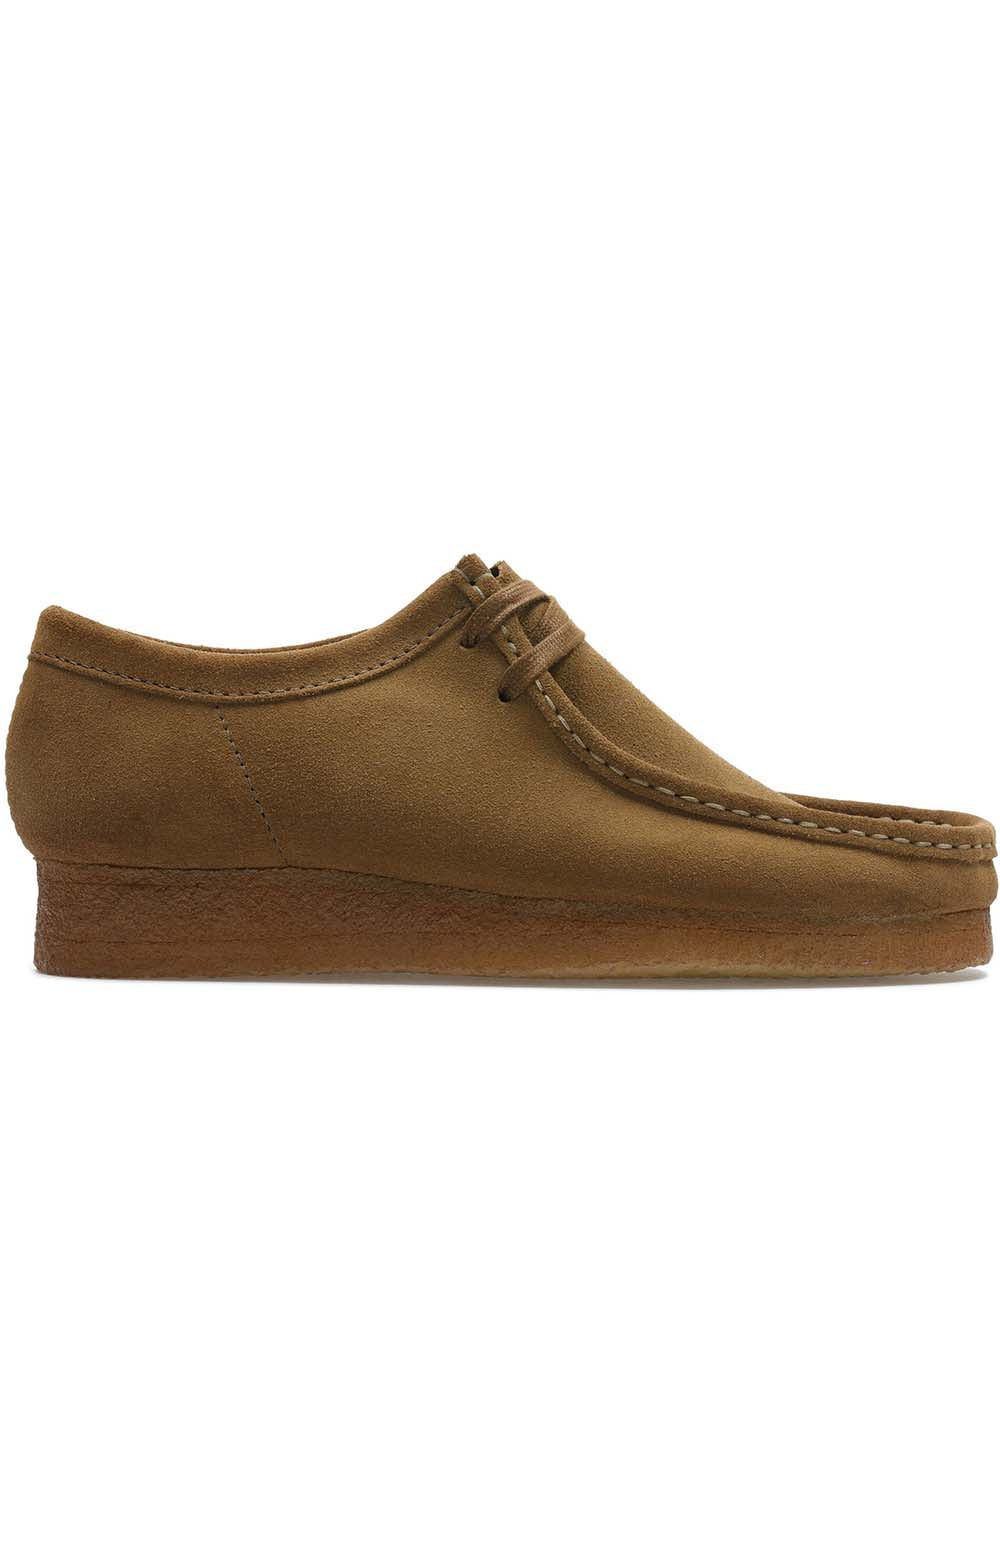 Close up of the Clarks Originals Wallabee Low Men's Cola Suede 26155518 shoe's sole